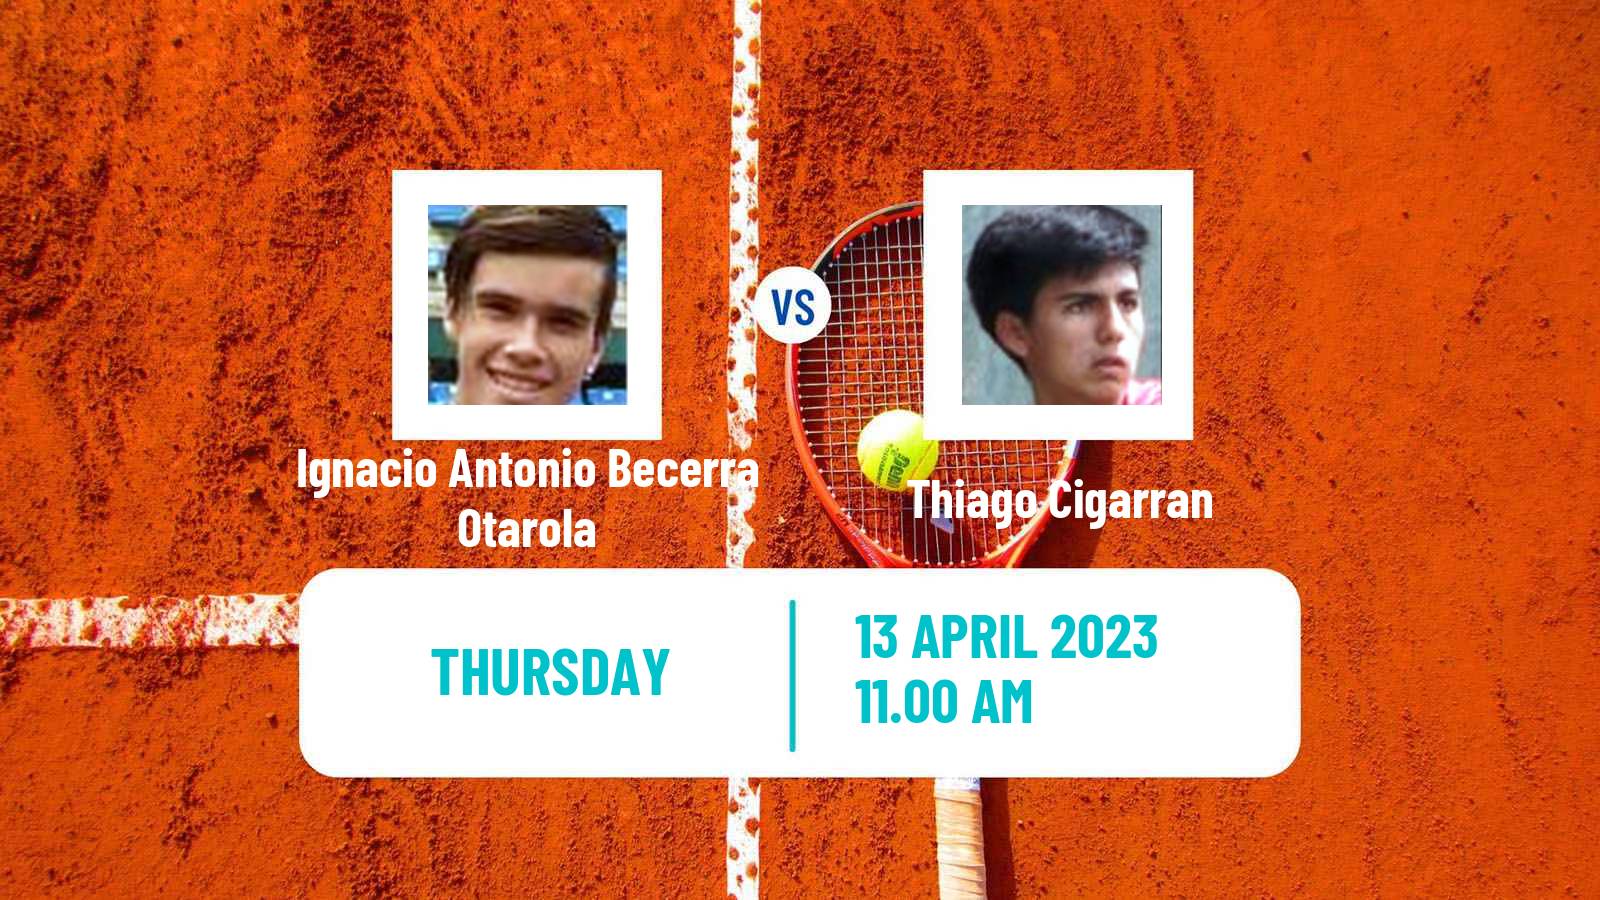 Tennis ITF Tournaments Ignacio Antonio Becerra Otarola - Thiago Cigarran